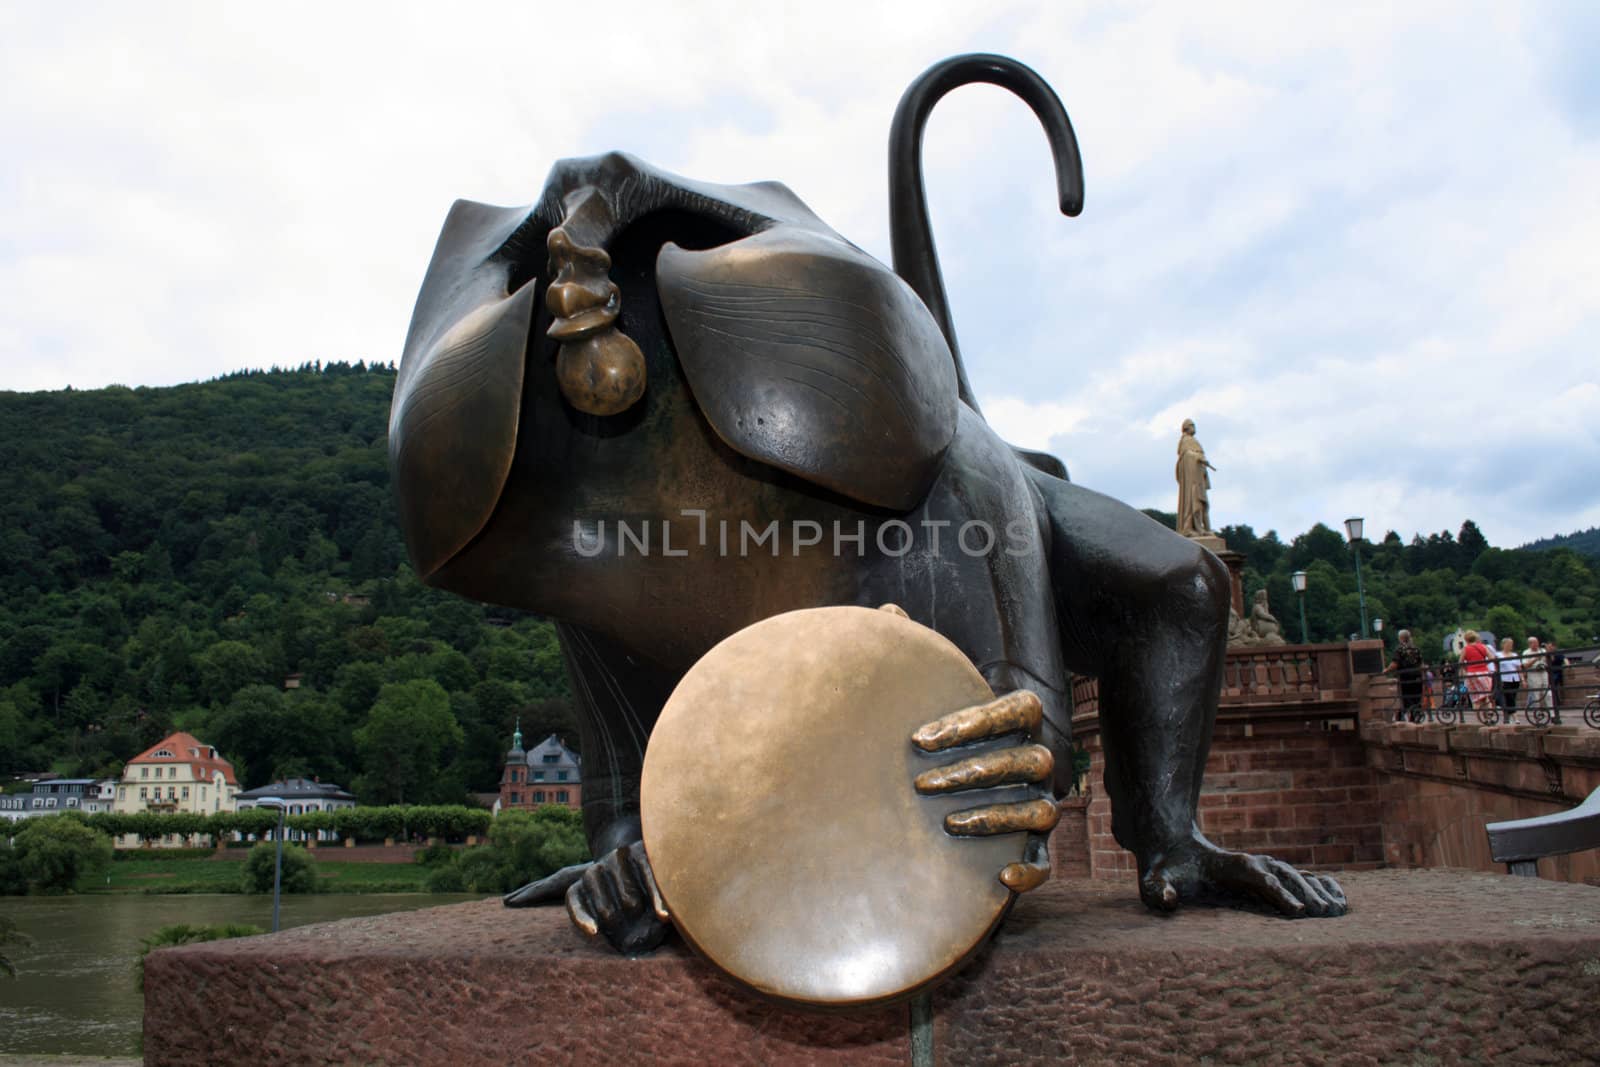 The Bruckenaffe, an ape sculpture placed in Heidelberg, Baden-Wurtemberg, Germany.